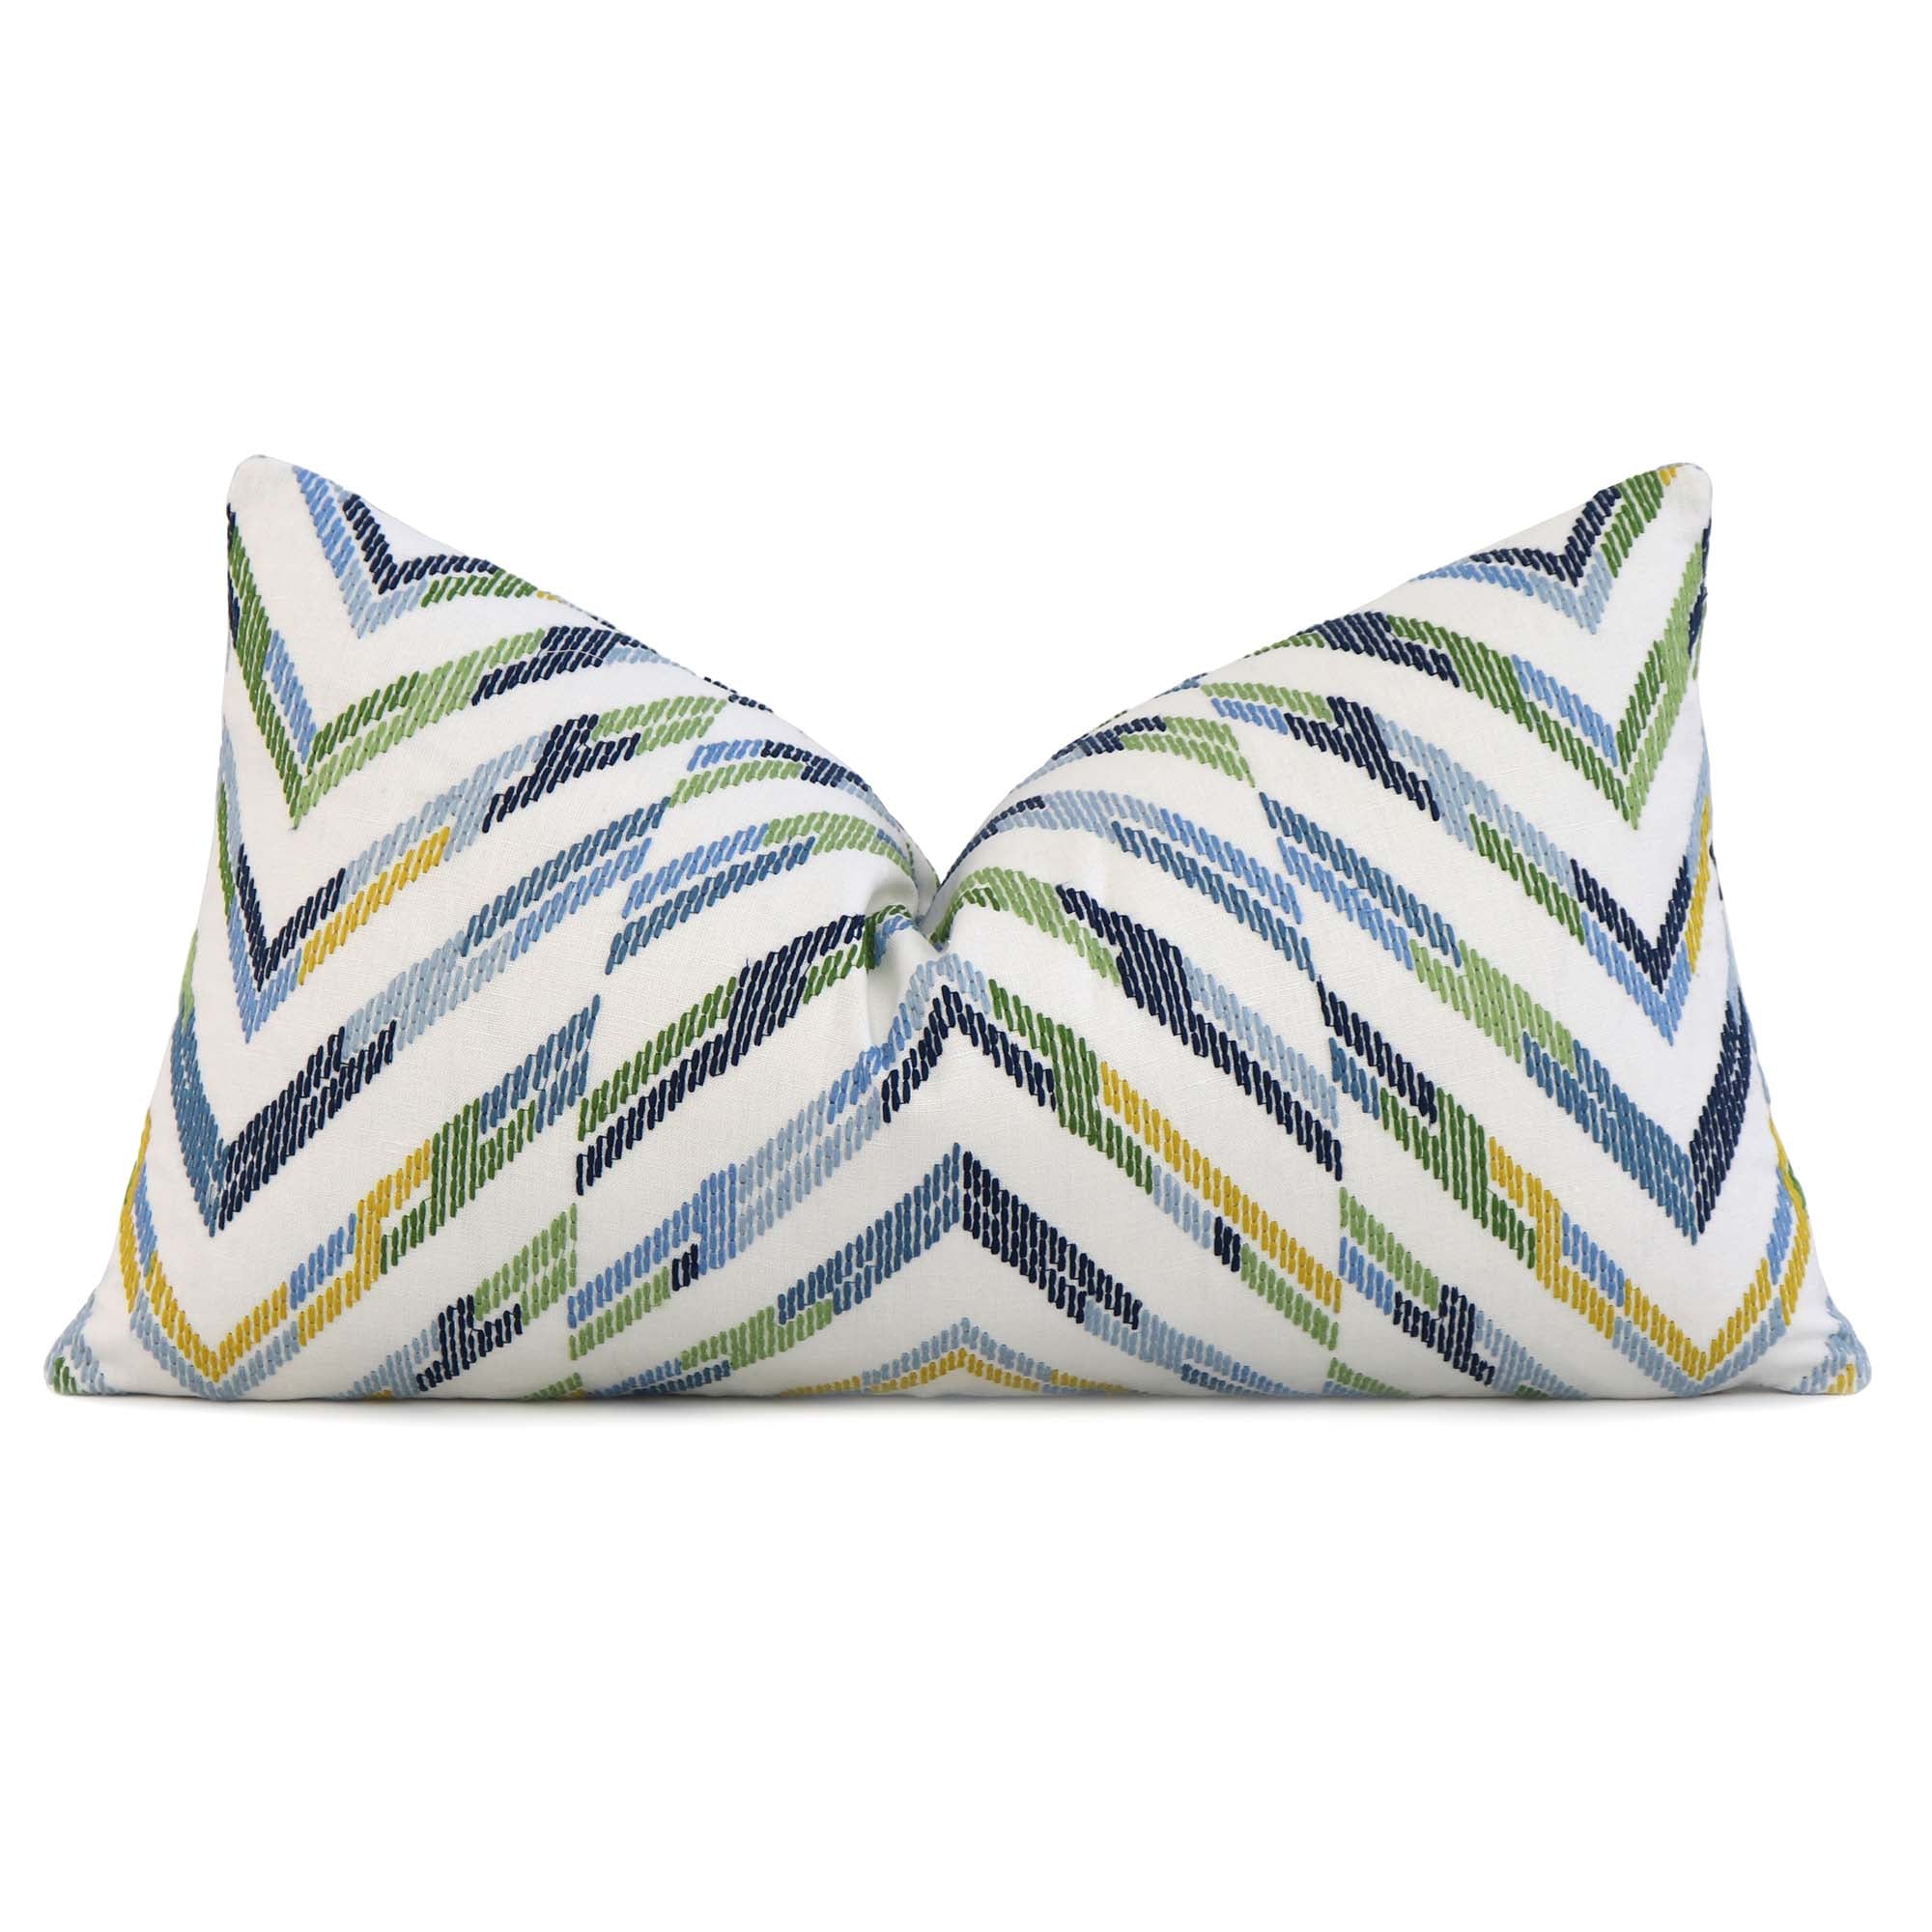 Thibaut Hamilton Textured Embroidery Geometric Blue and Yellow Designer Throw Lumbar Pillow Cover